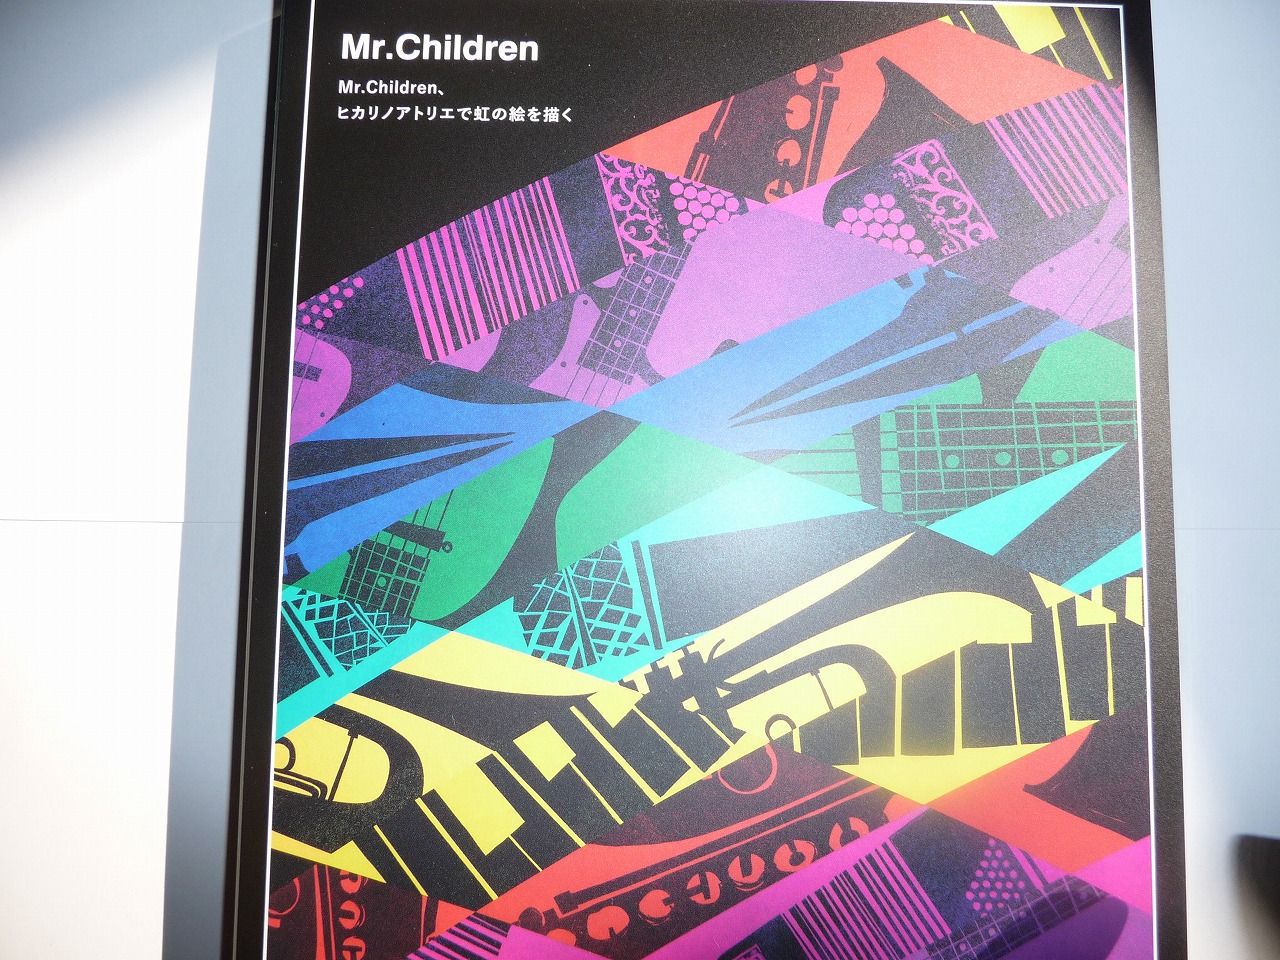 Live Documentary Mr Children ヒカリノアトリエで虹の絵を描く Dvd Mr Children データベース